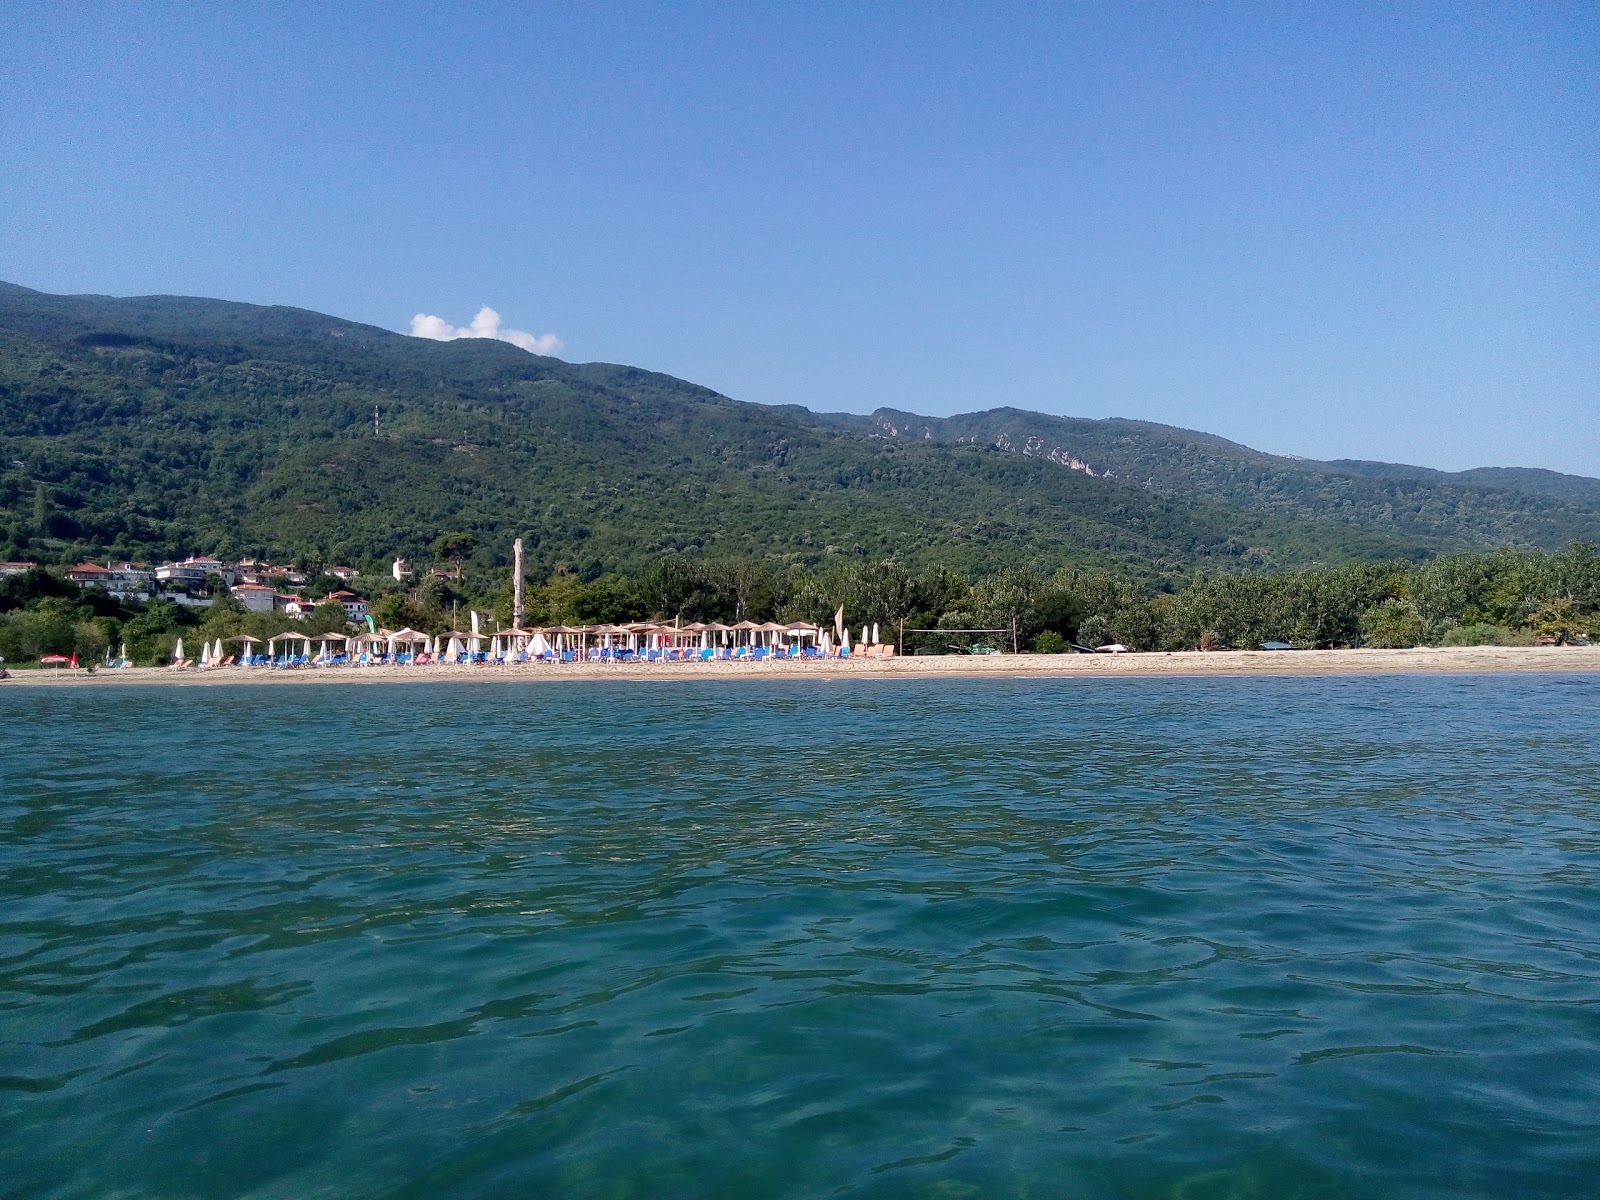 Foto de Defteri Gefira beach - lugar popular entre os apreciadores de relaxamento